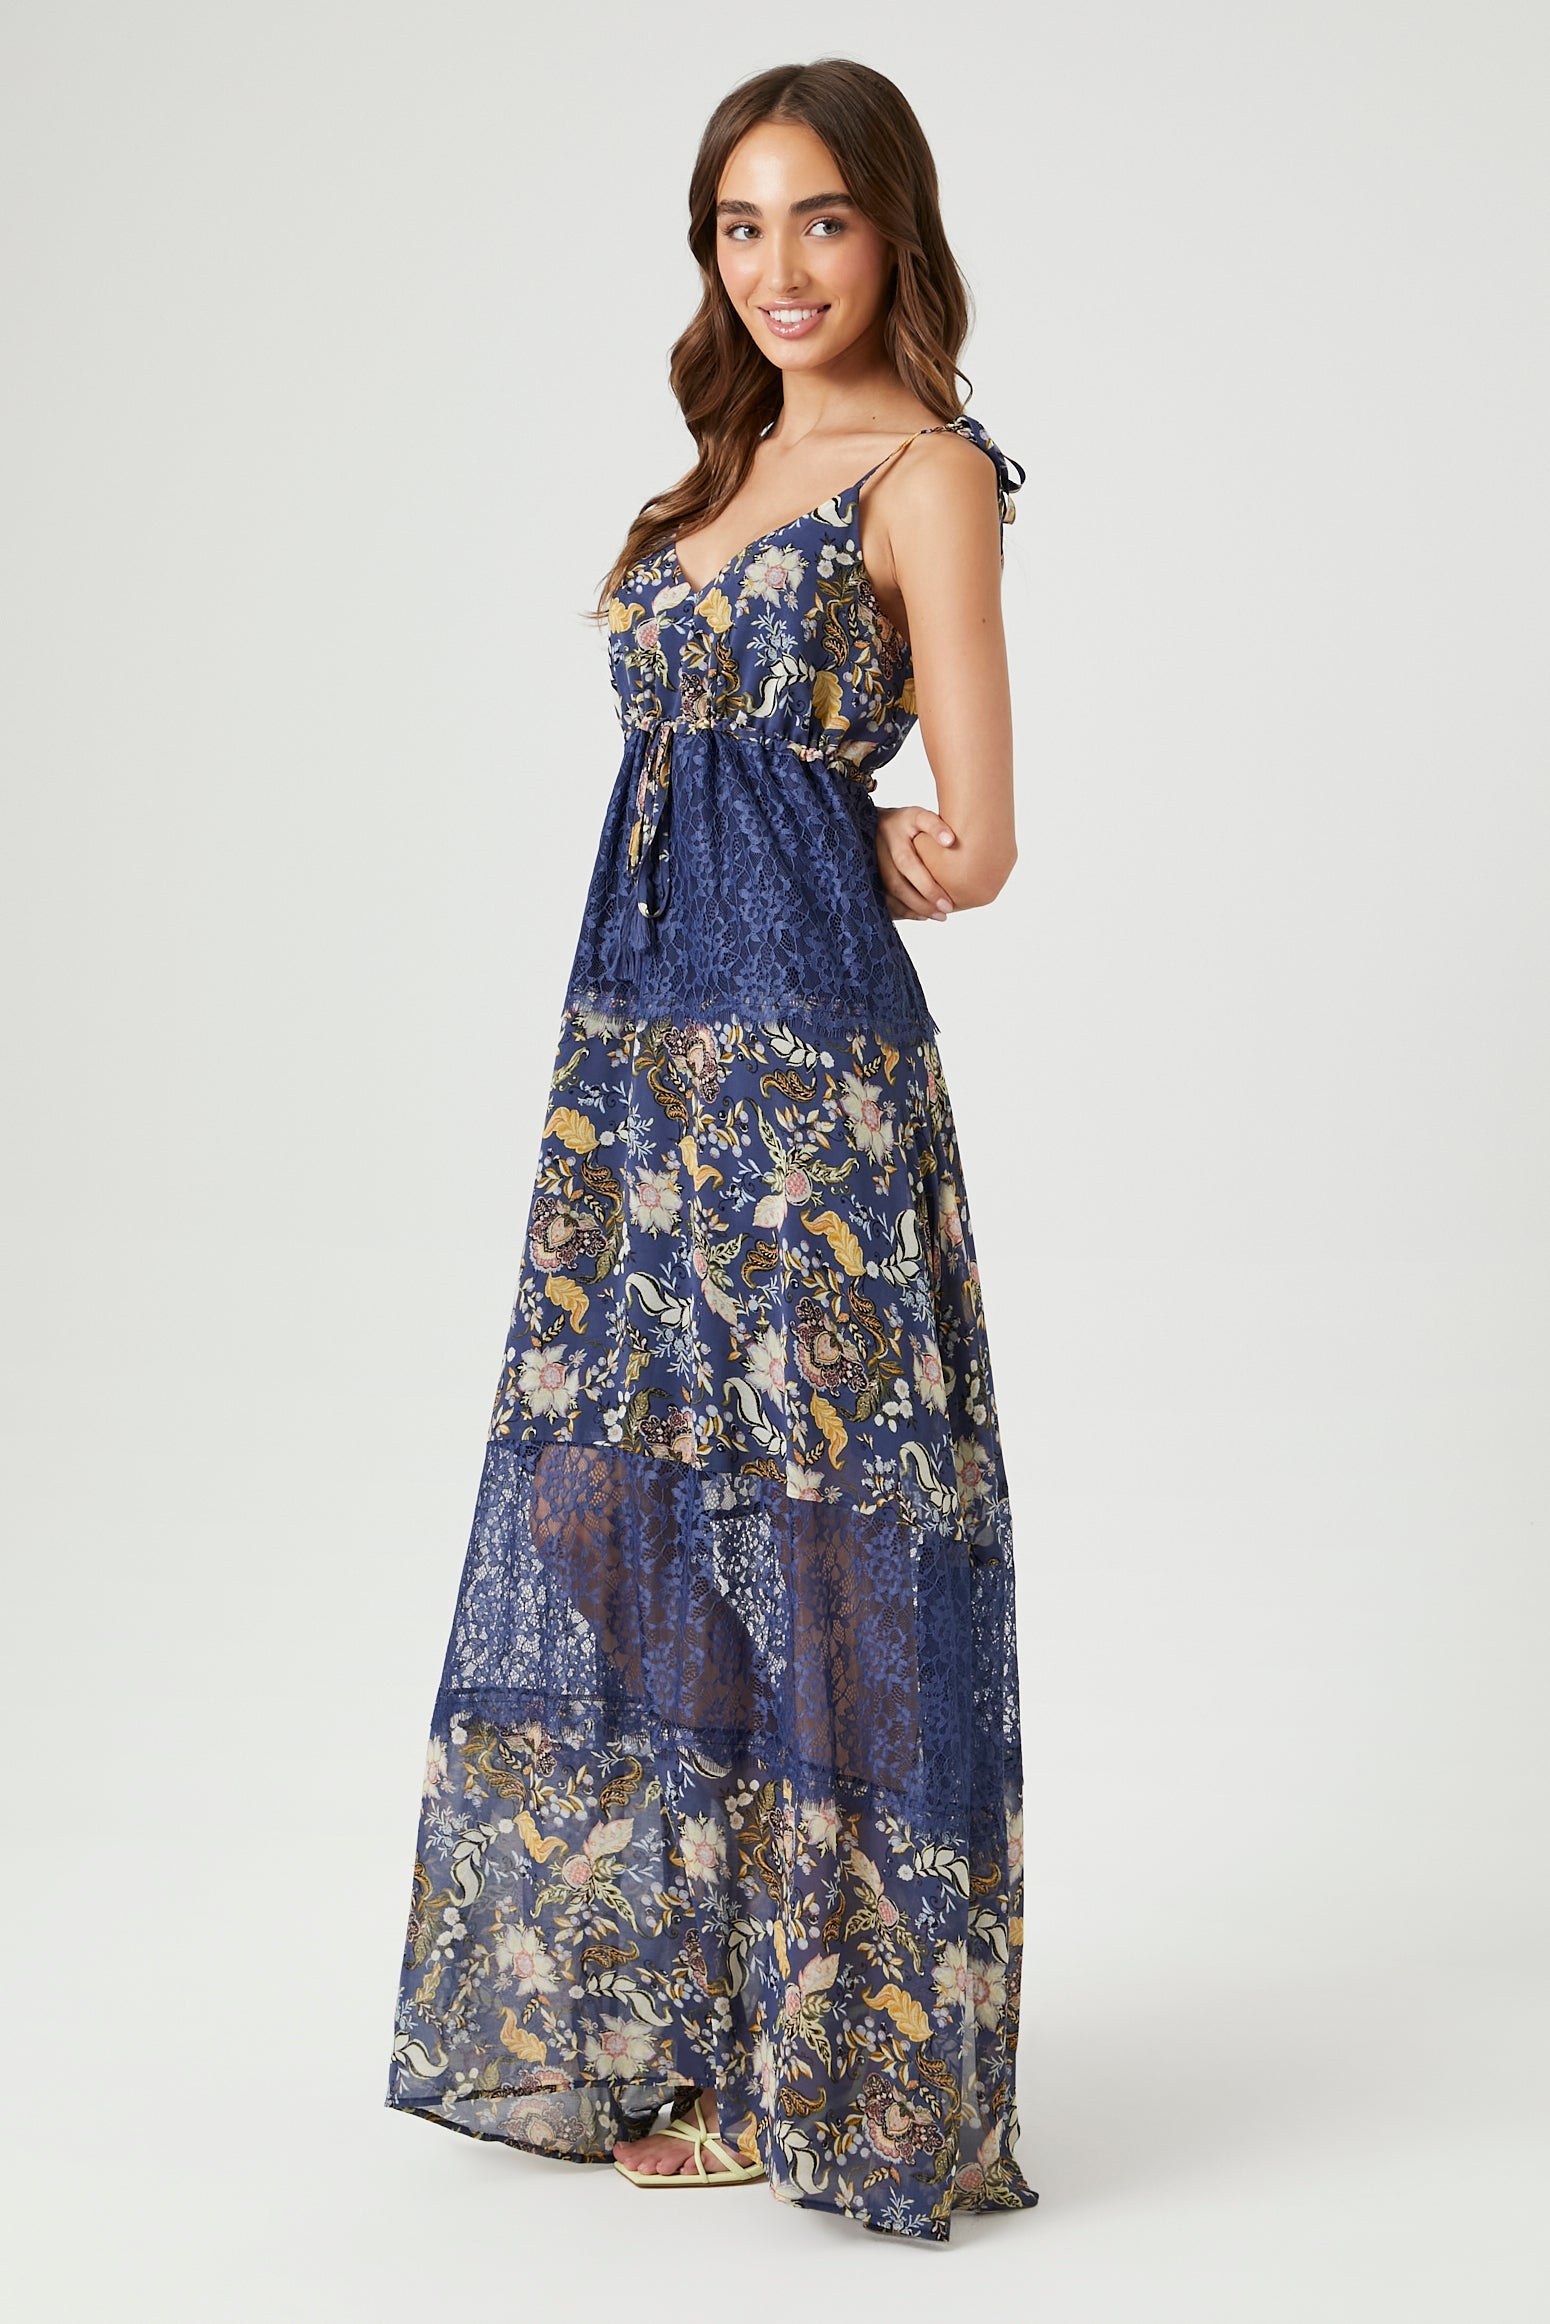 Bluemulti Chiffon Ornate Print Maxi Dress 1